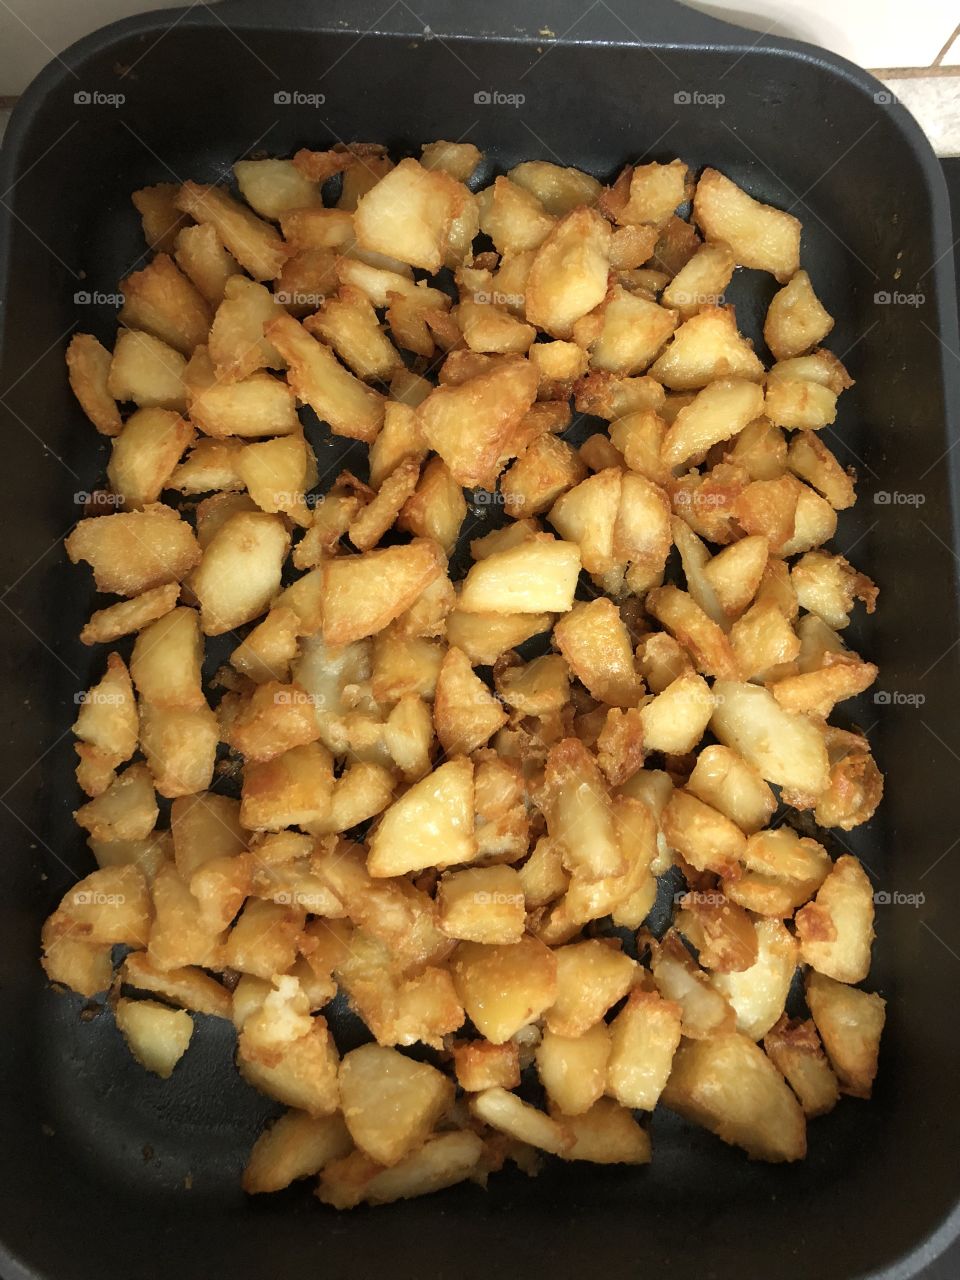 Homemade baked potatoes